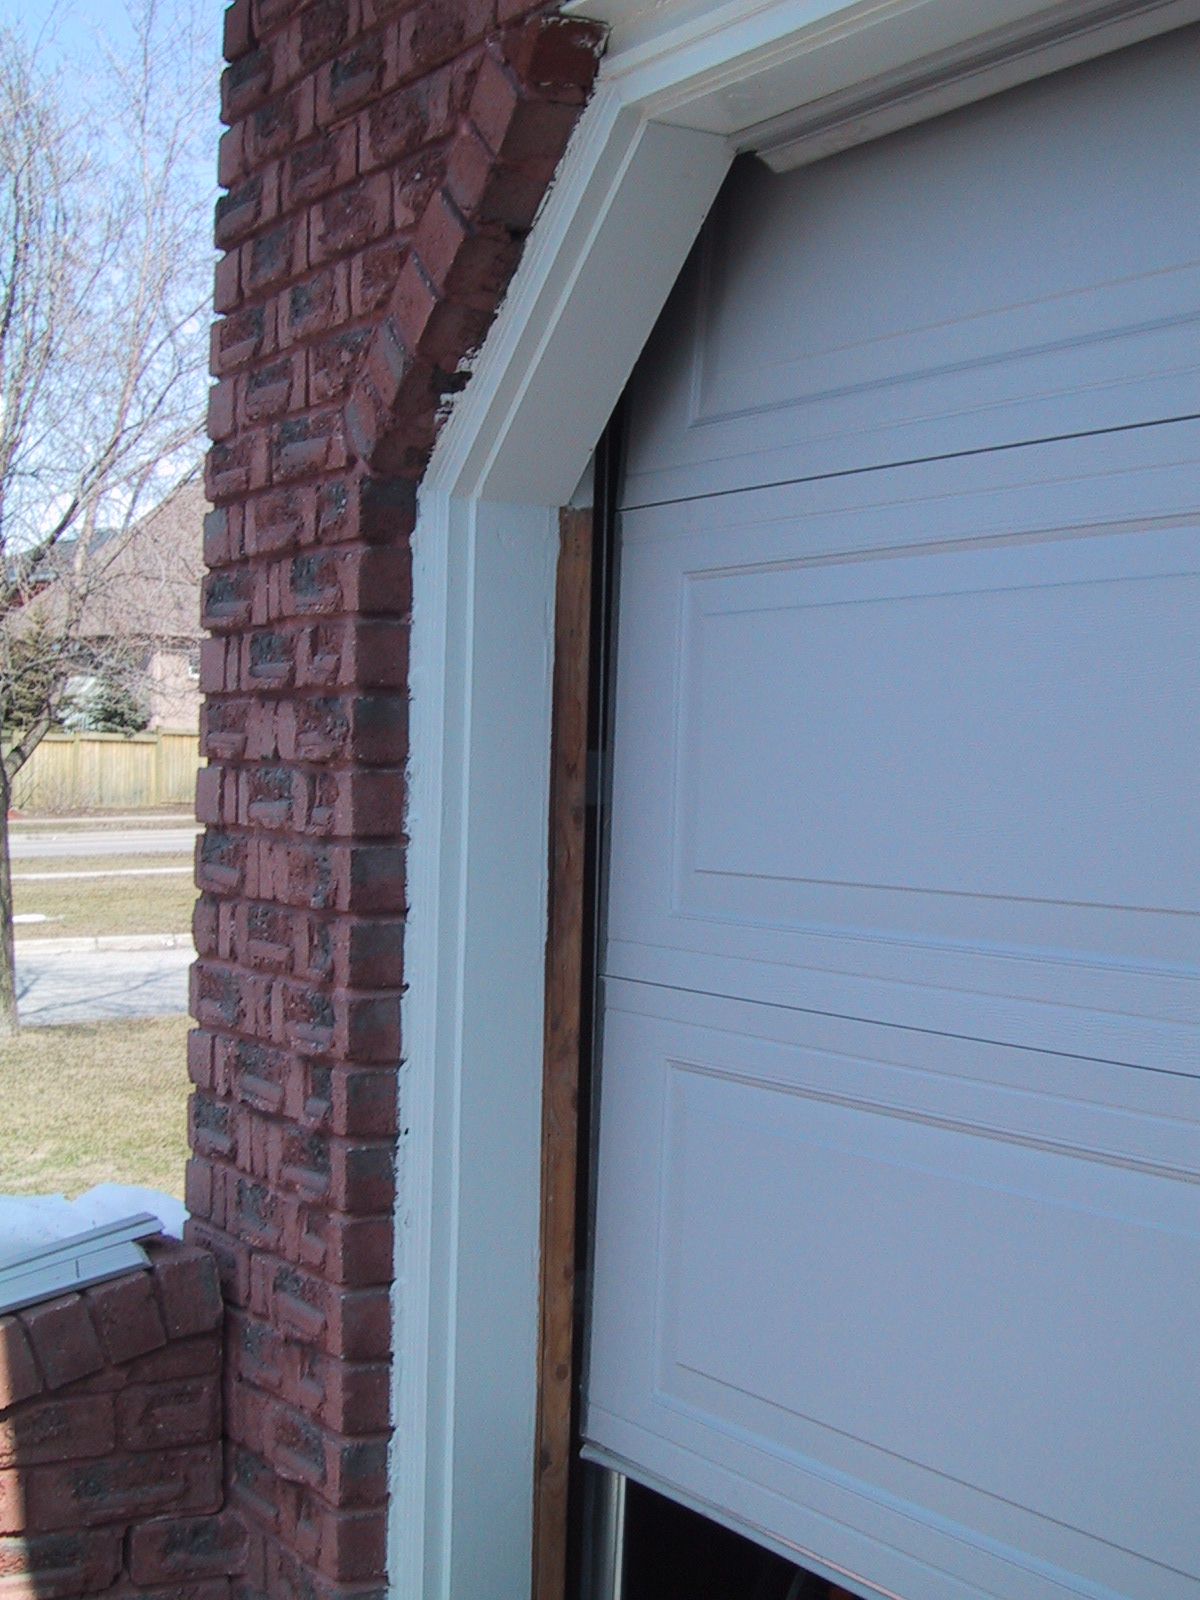 Garage Door Frame With No Weather Stripping